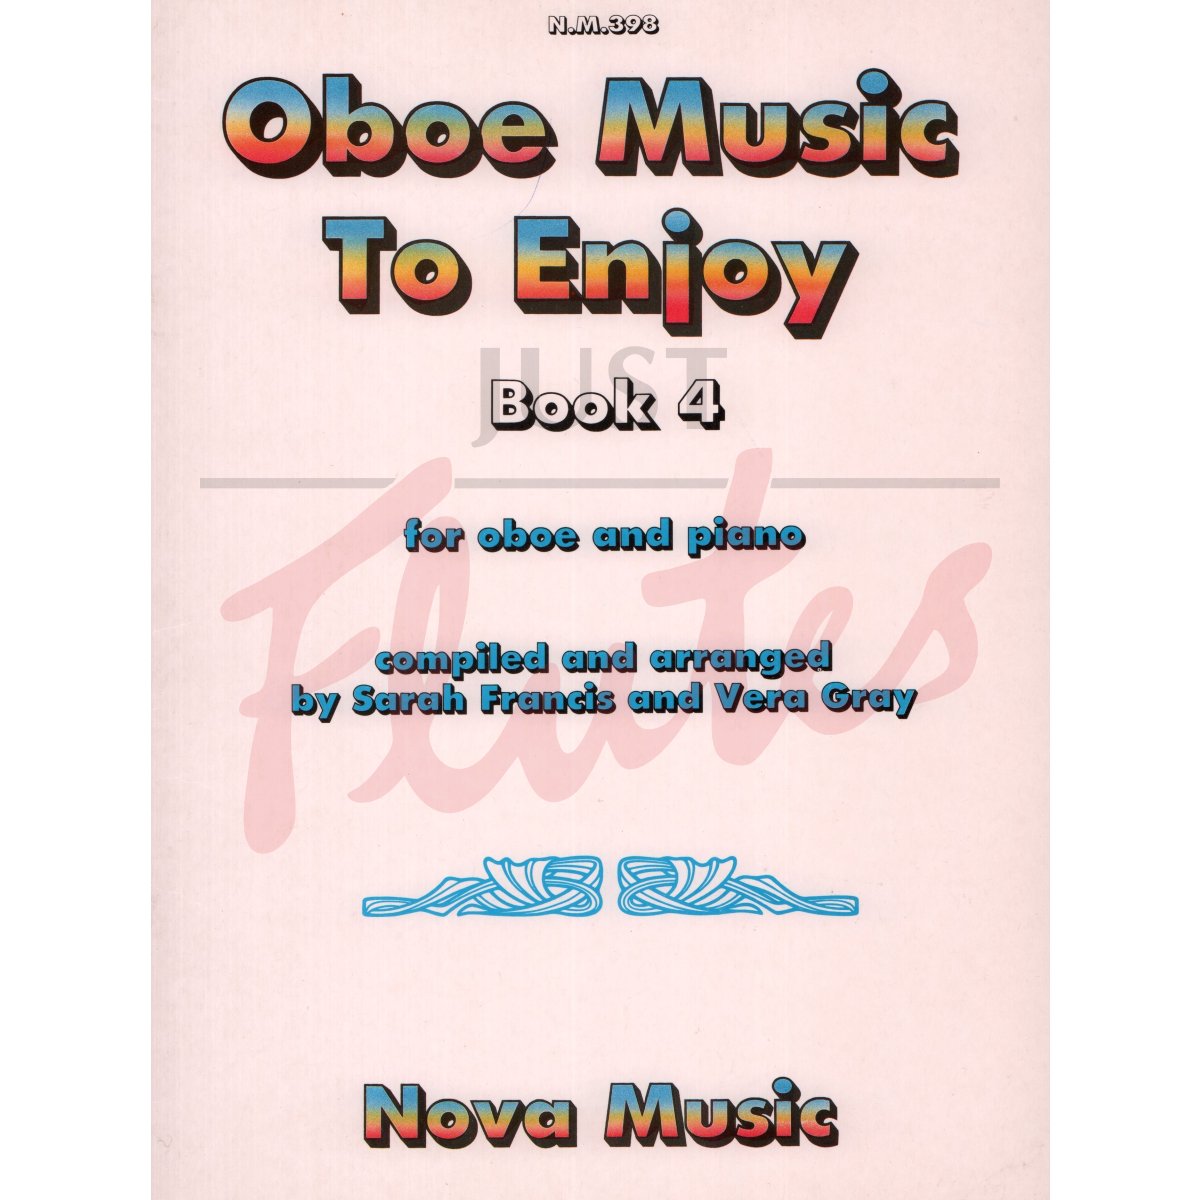 Oboe Music to Enjoy Book 4